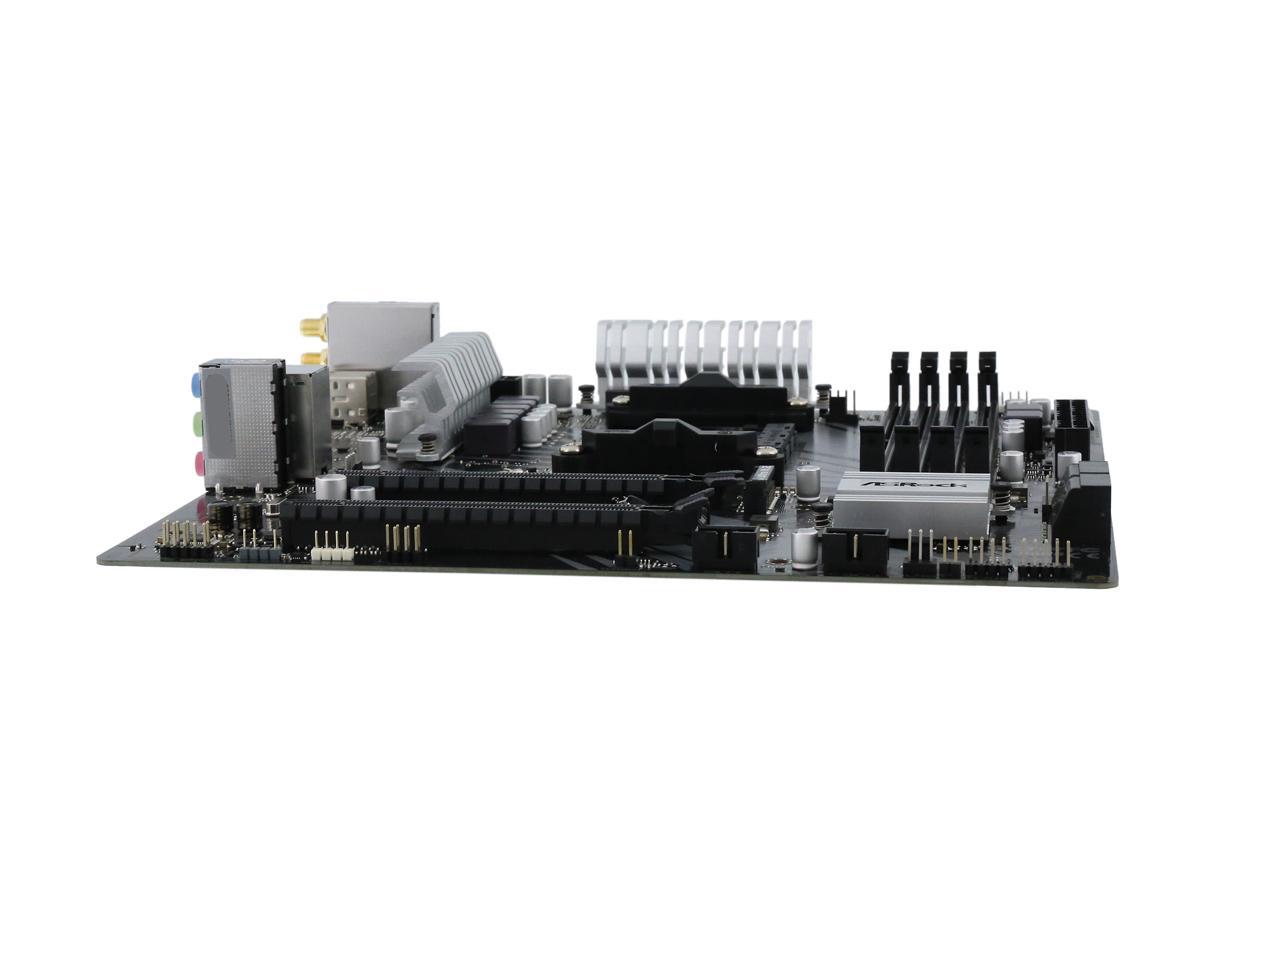 ASRock B450M/AC AM4 Micro ATX AMD Motherboard - Newegg.com